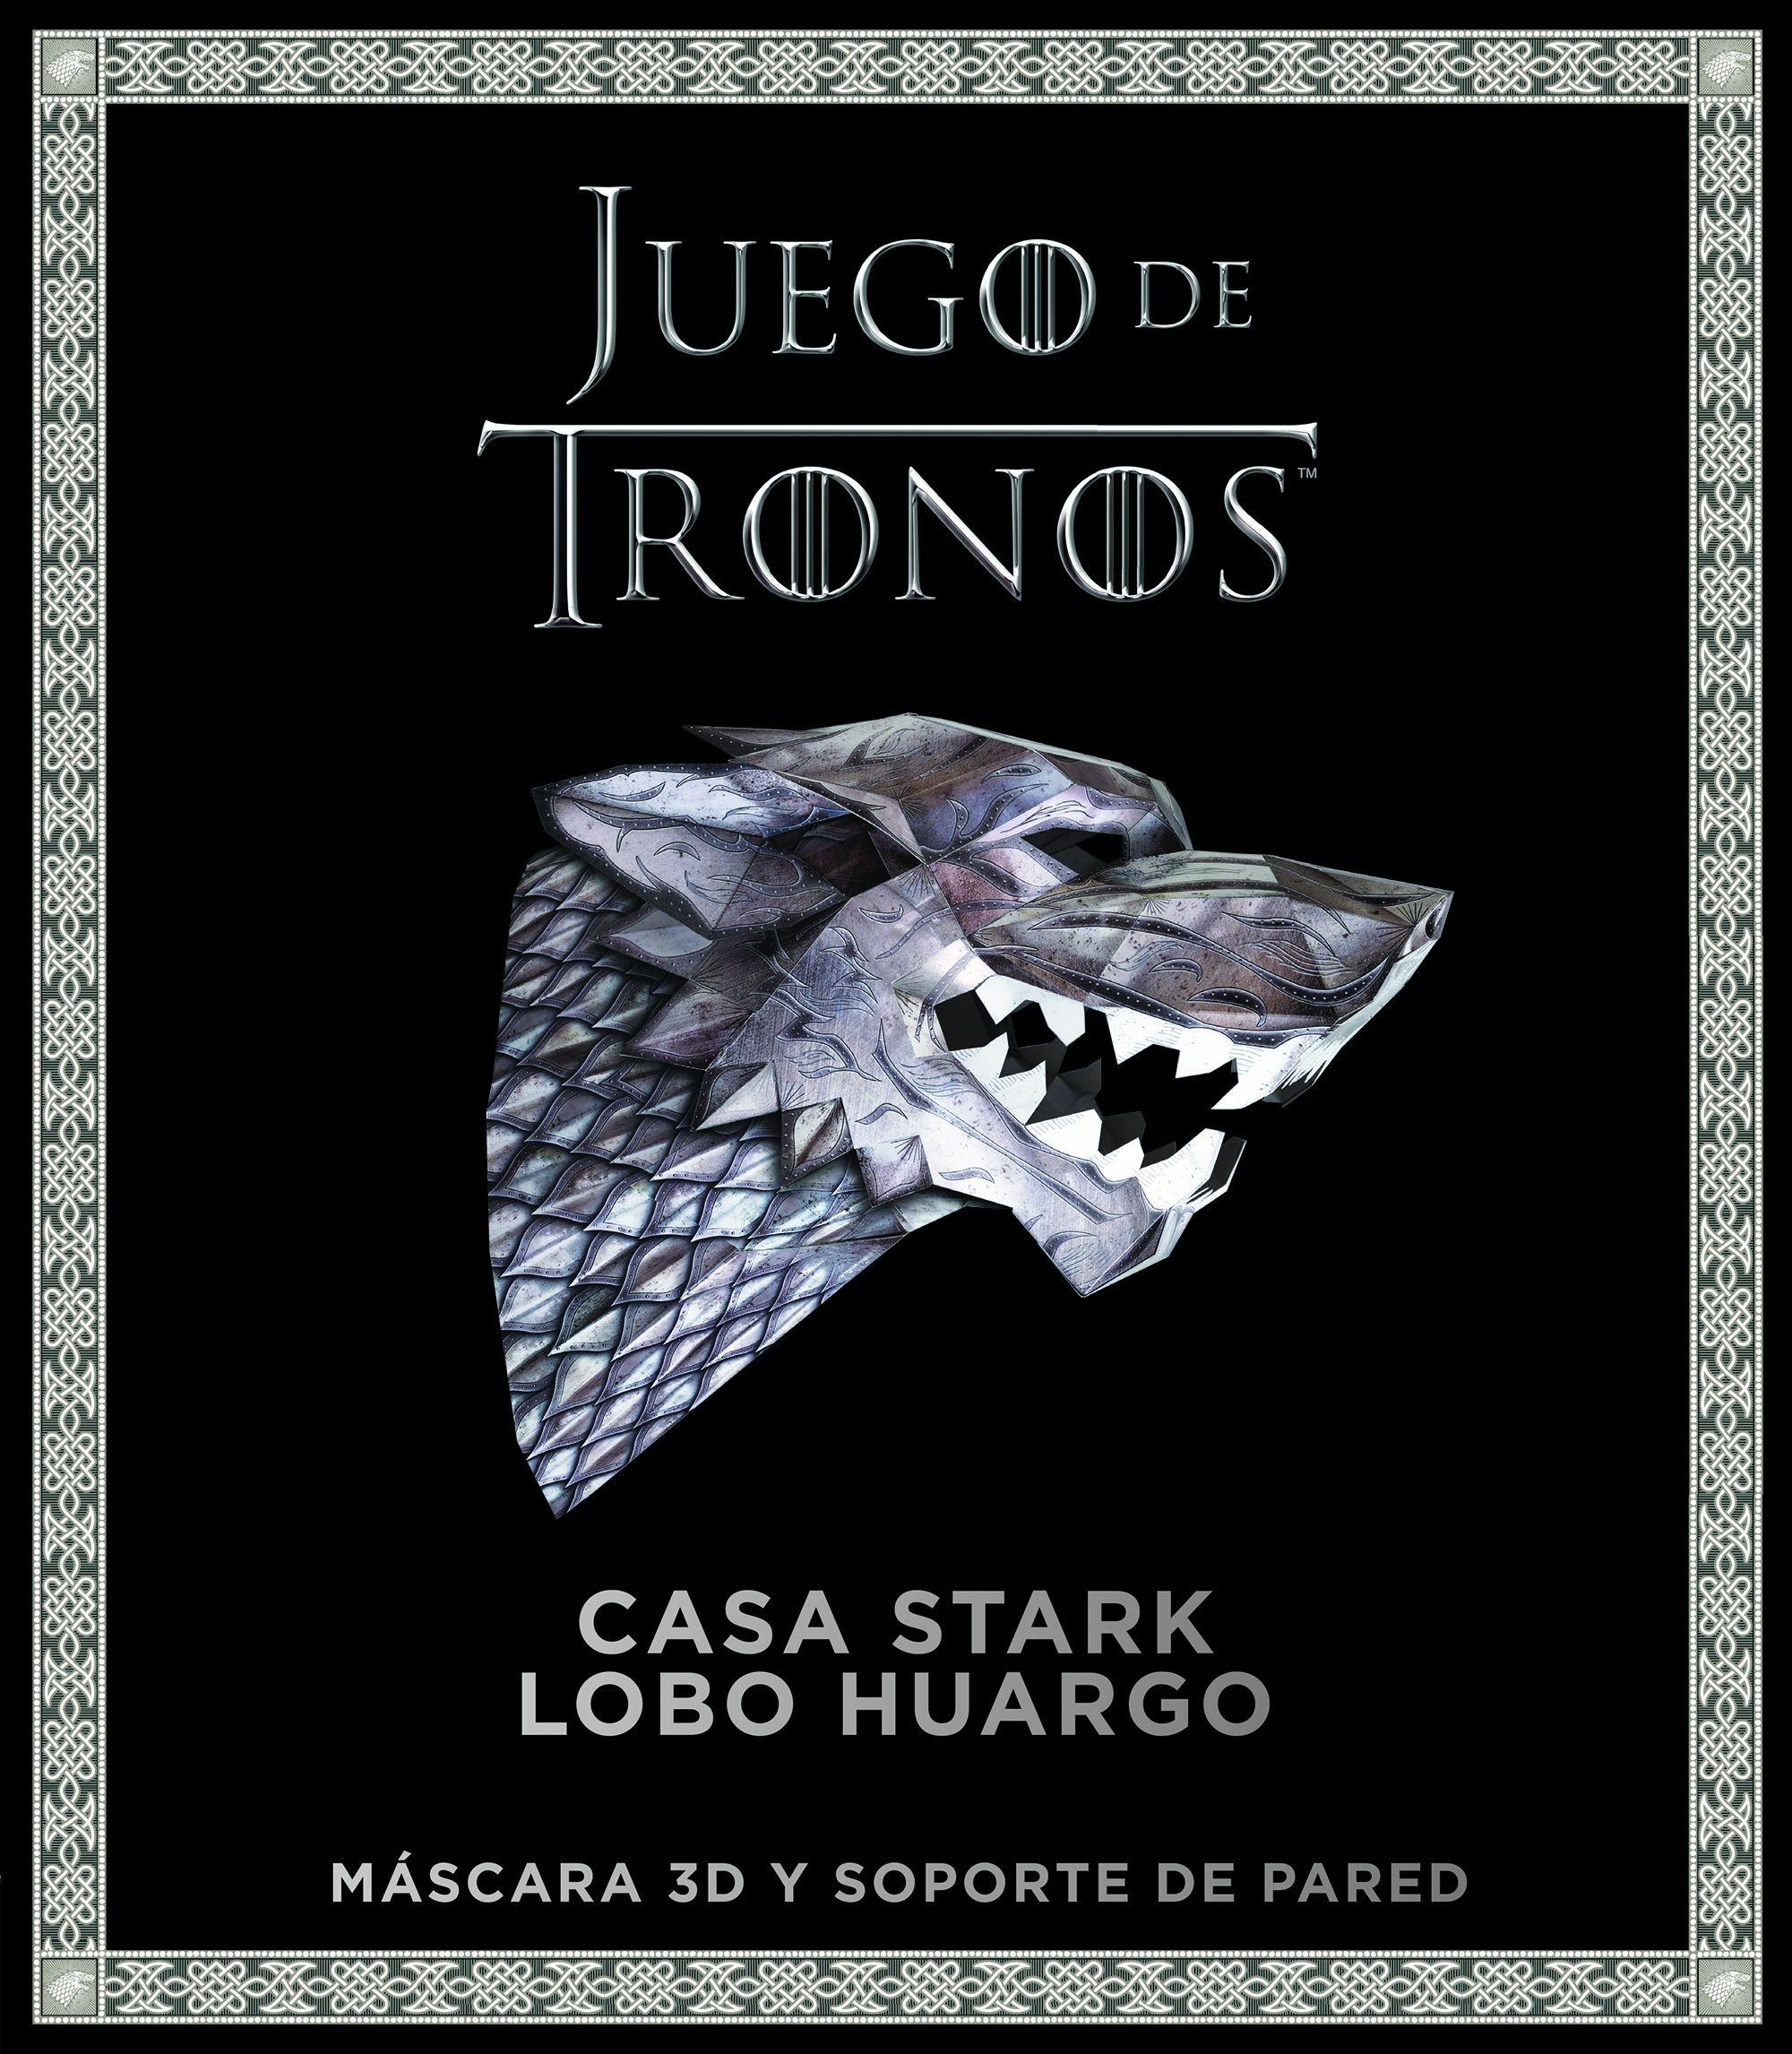 Juego de Tronos "Casa Stark: lobo huargo"